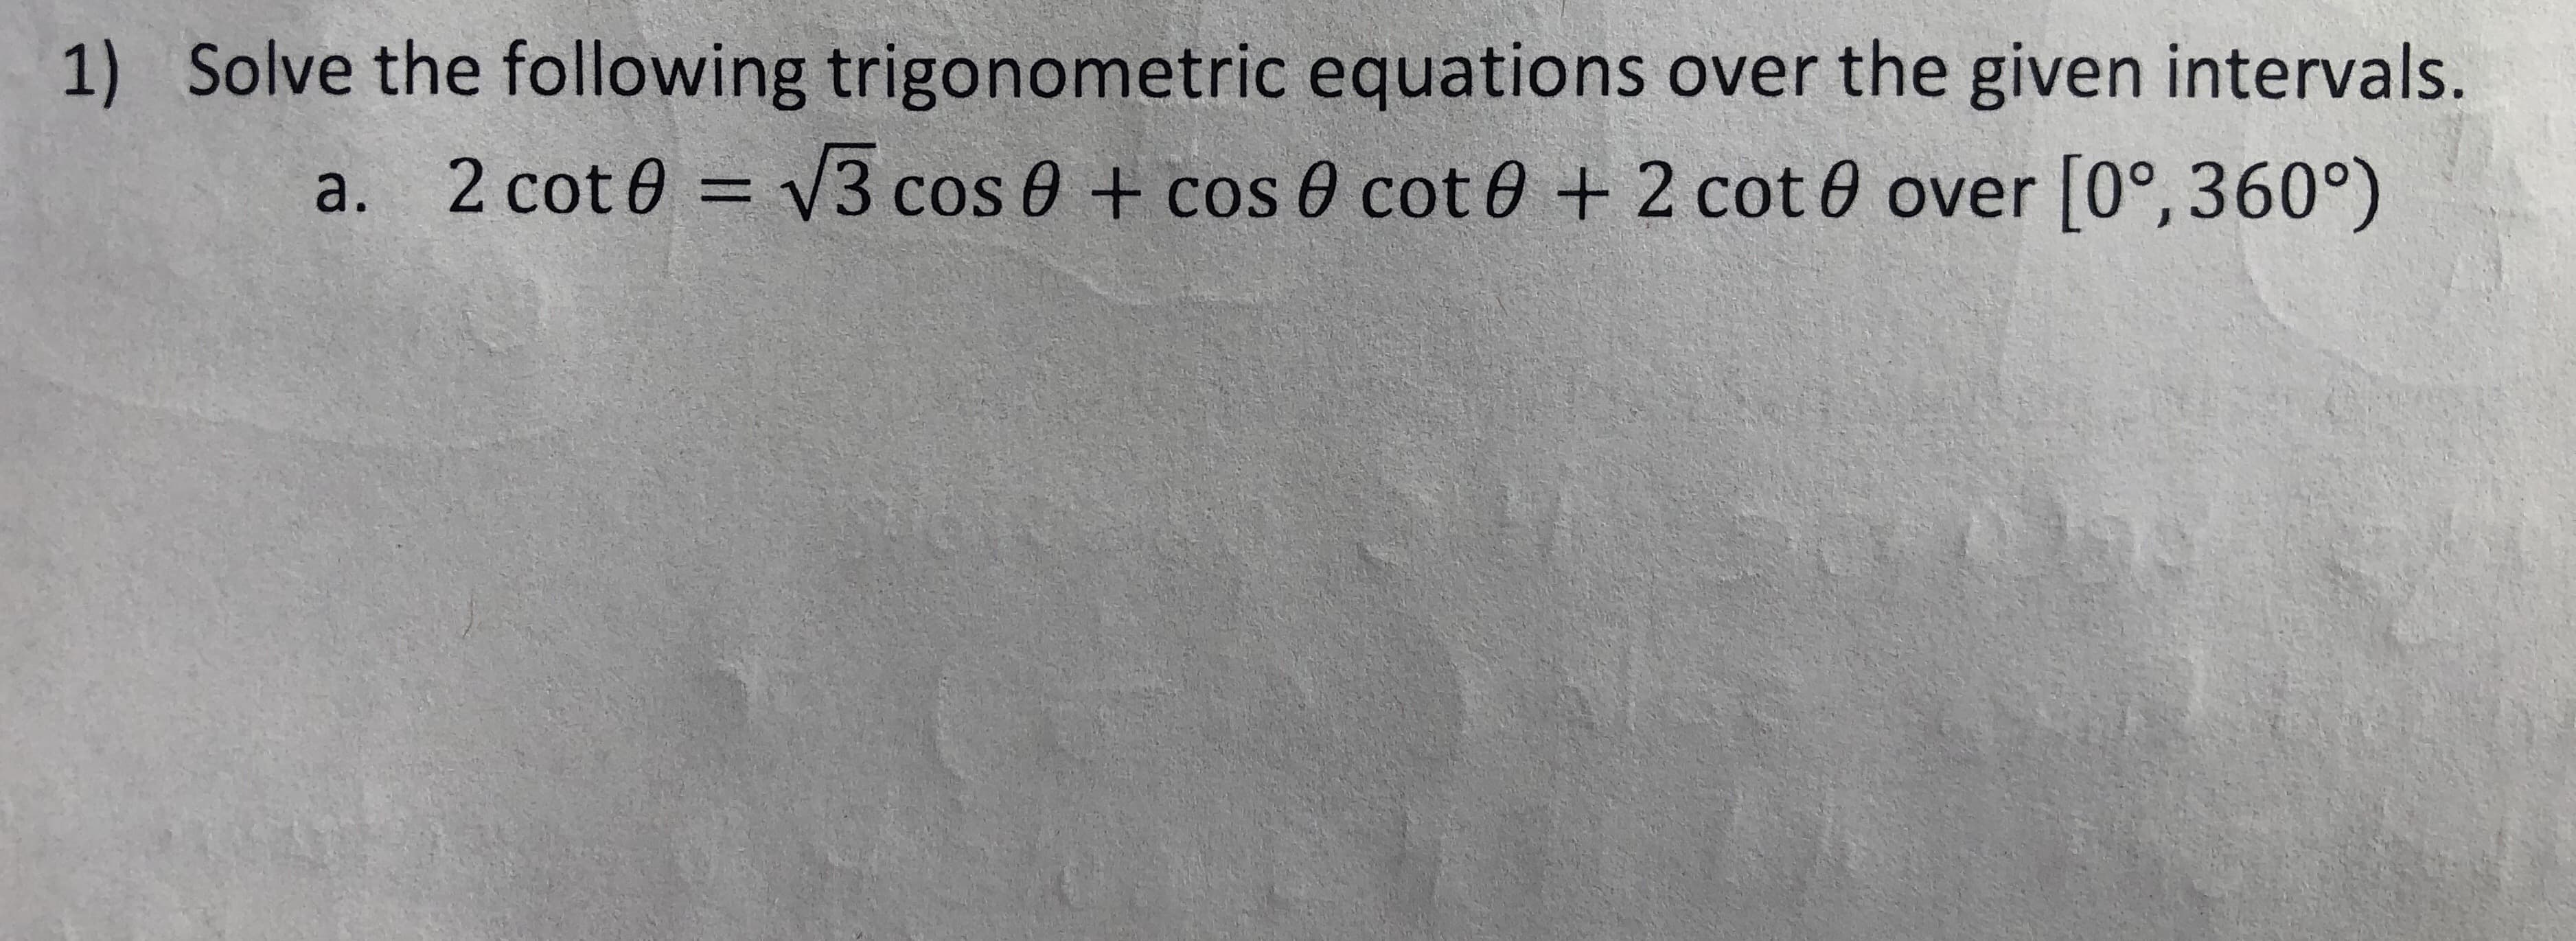 1) Solve the following trigonometric equations over the given intervals.
a. 2 cot0 = V3 cos 0 + cos 0 cot0 + 2 cot 0 over [0°, 360°)
%3D
